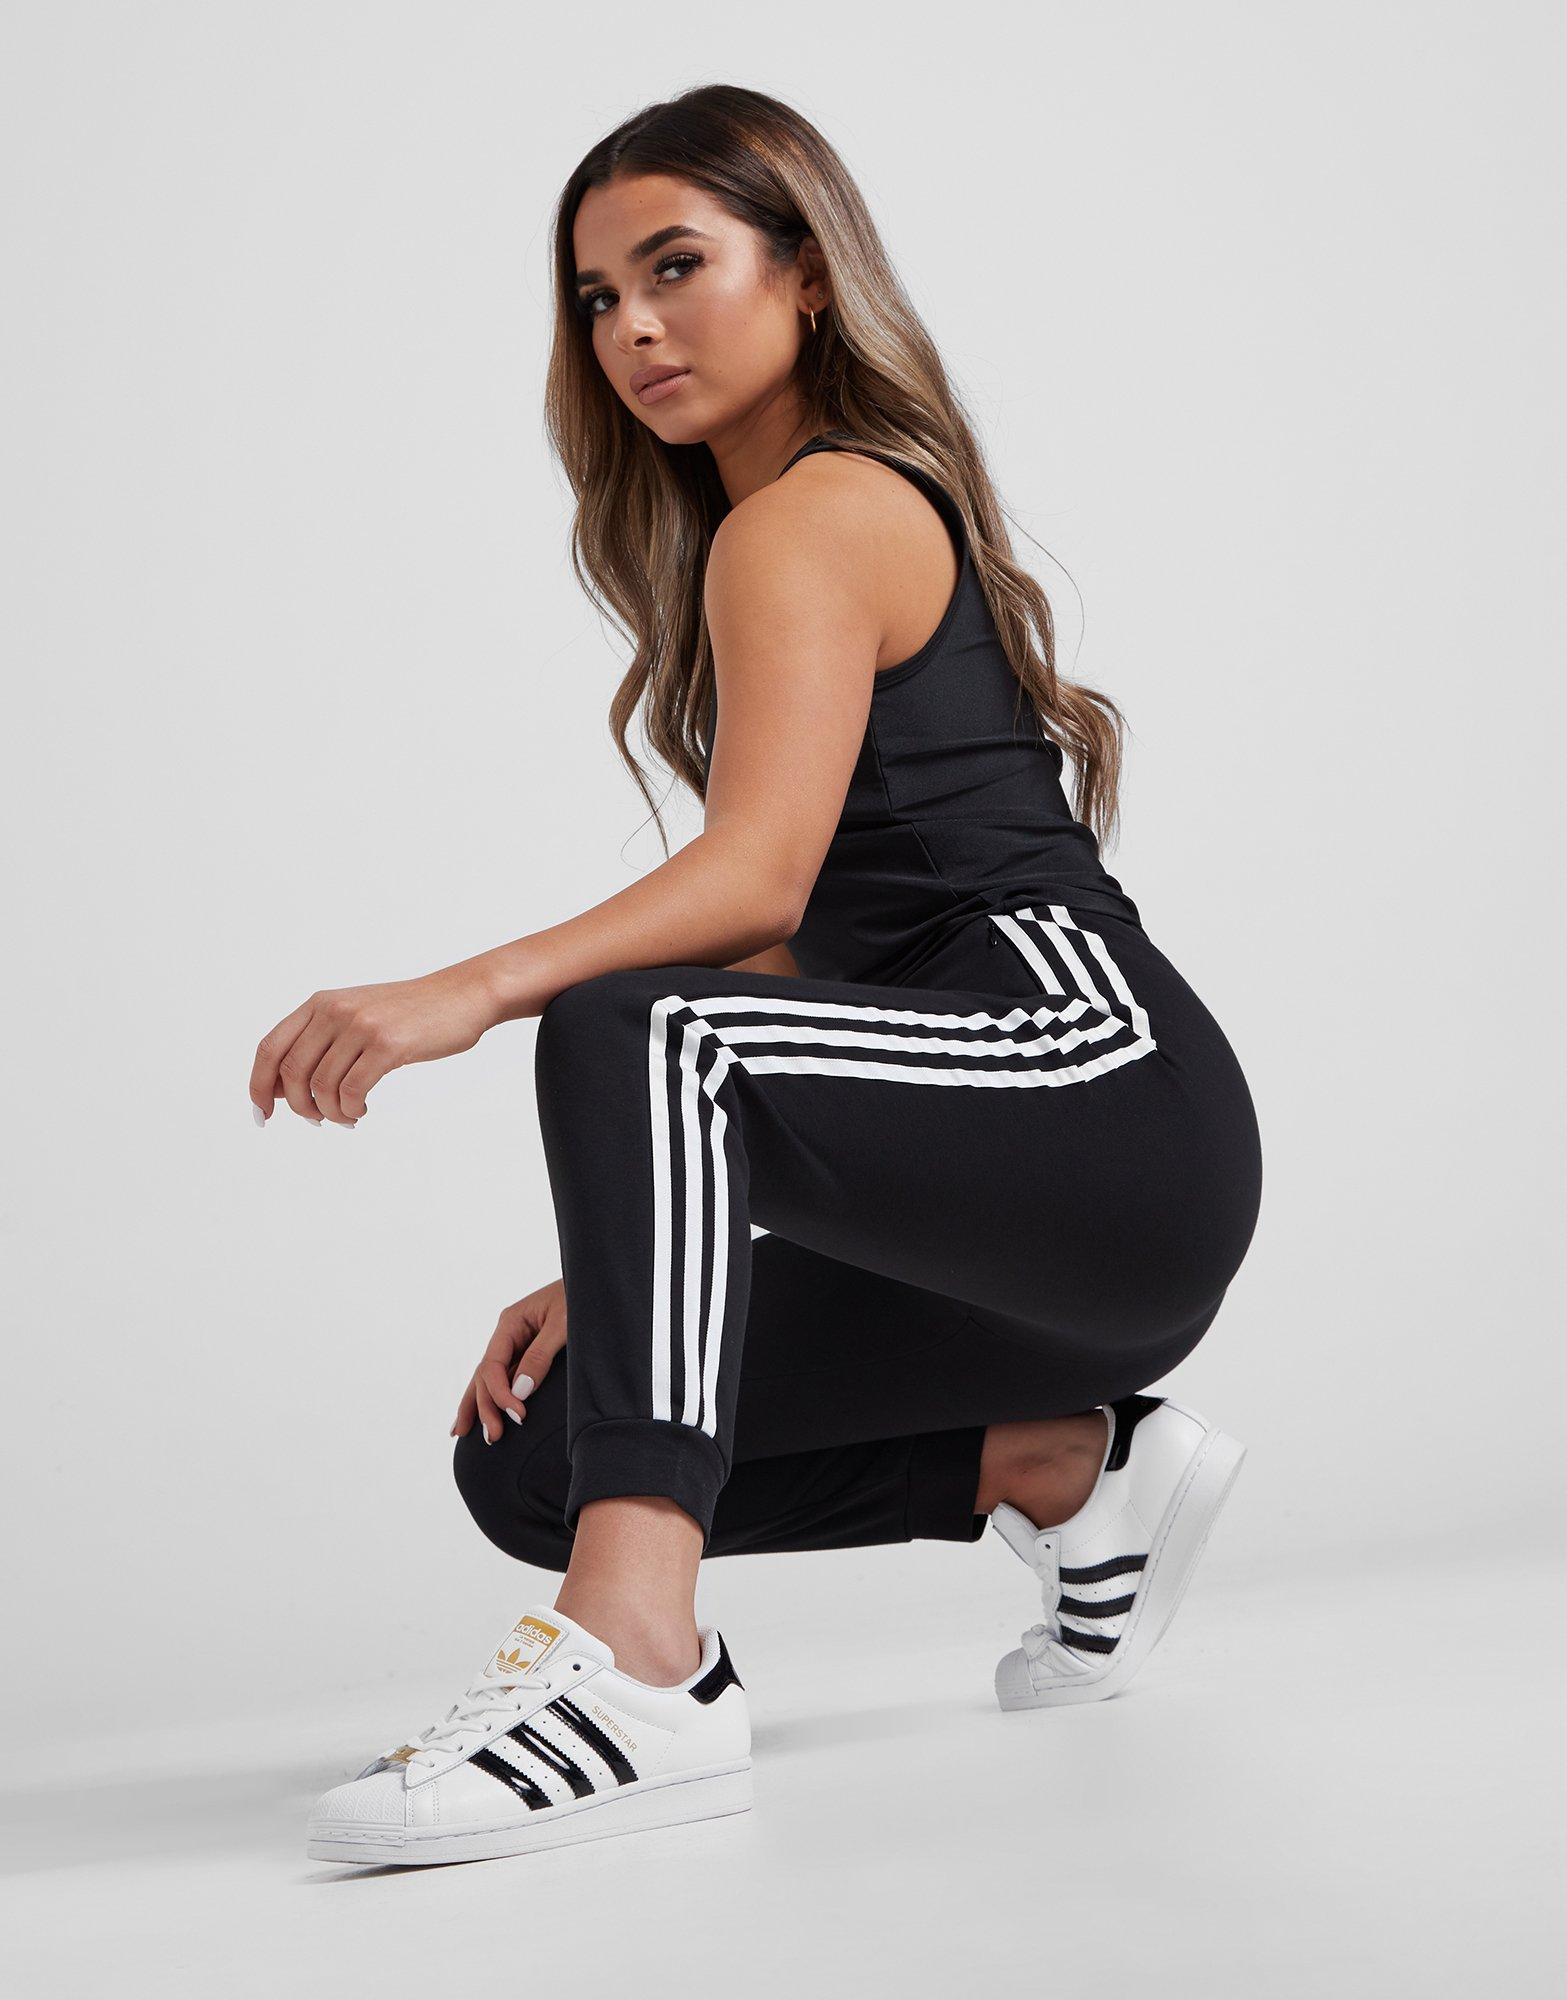 adidas originals superstar 3 stripe skinny joggers in black